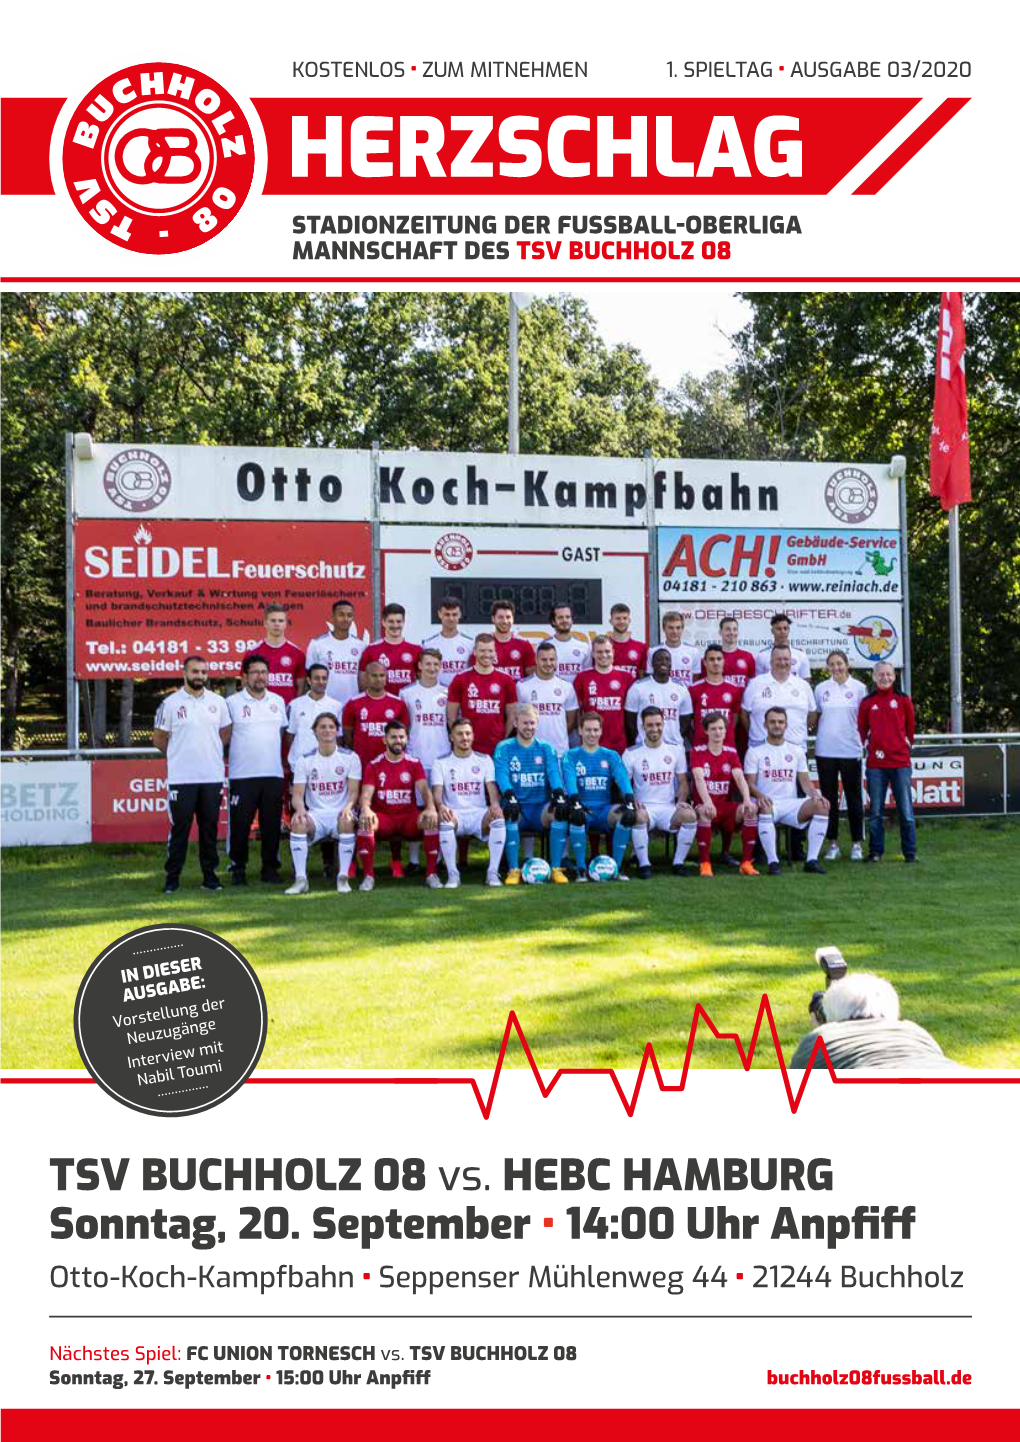 TSV BUCHHOLZ 08 Vs. HEBC HAMBURG Sonntag, 20